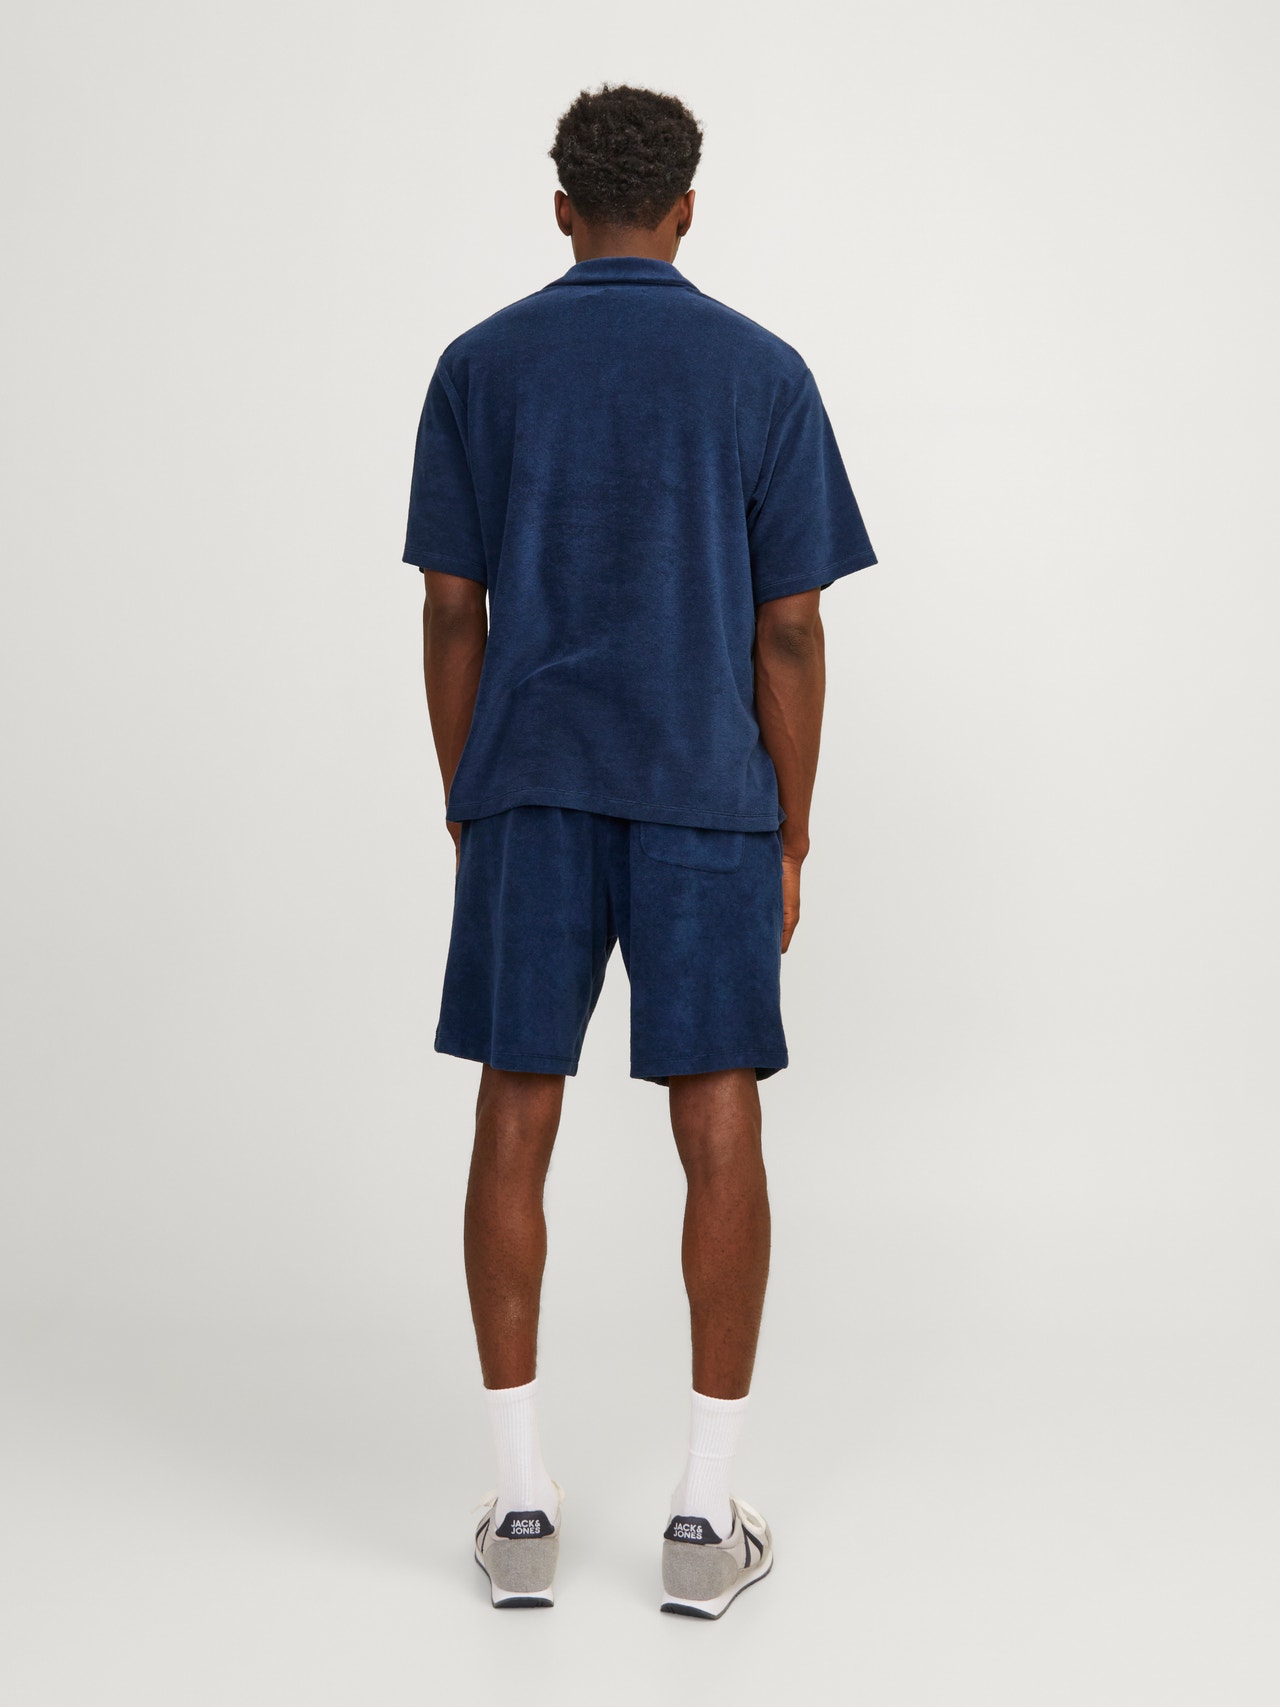 Jack & Jones Relaxed Fit Sweat shorts -Navy Blazer - 12236582